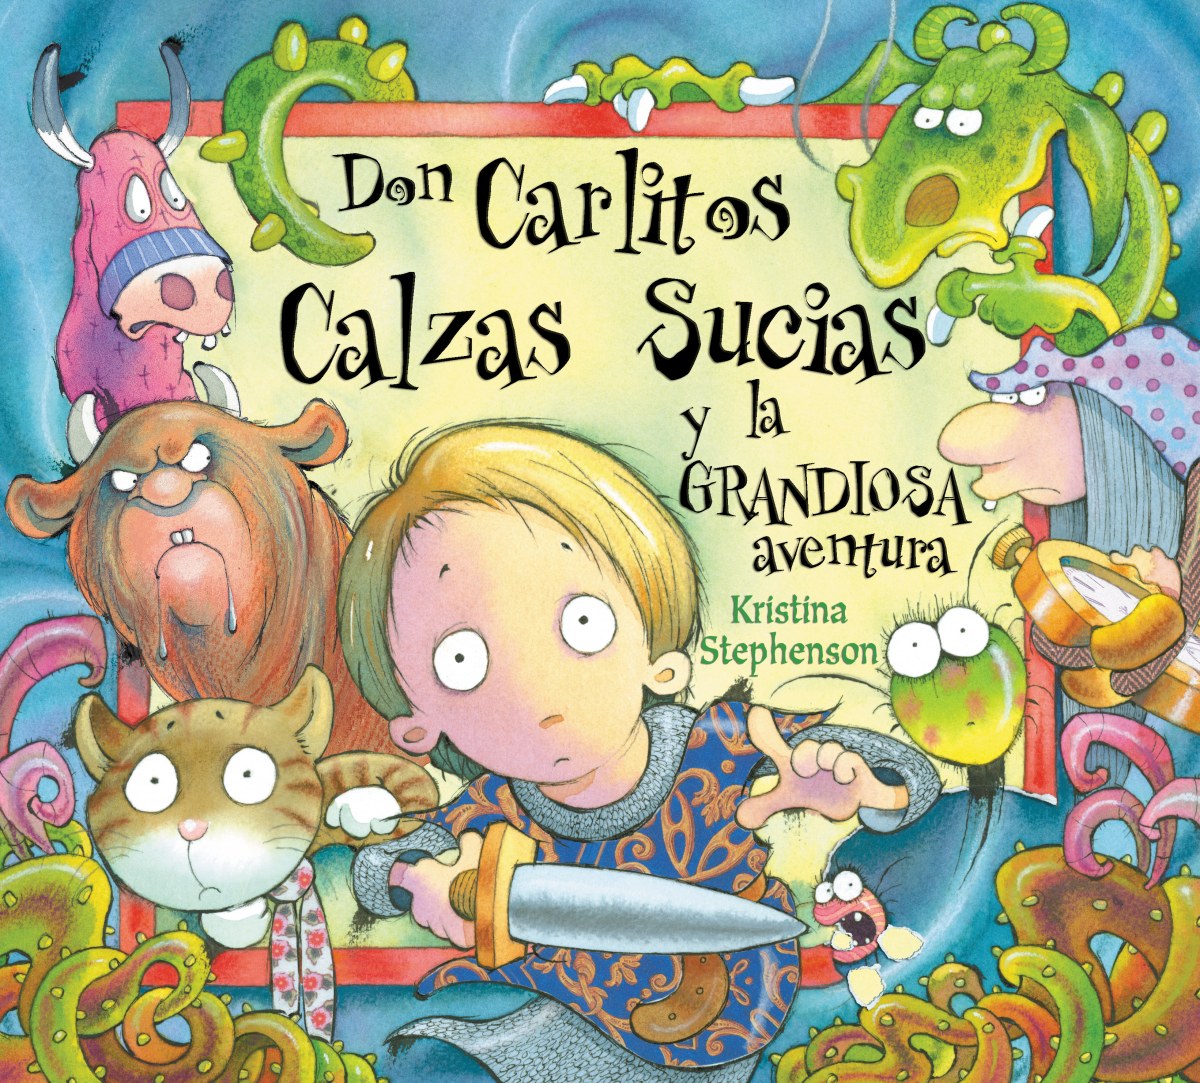 Don Carlitos Calzas Sucias y la grandiosa aventura - Stephenson,Kristina